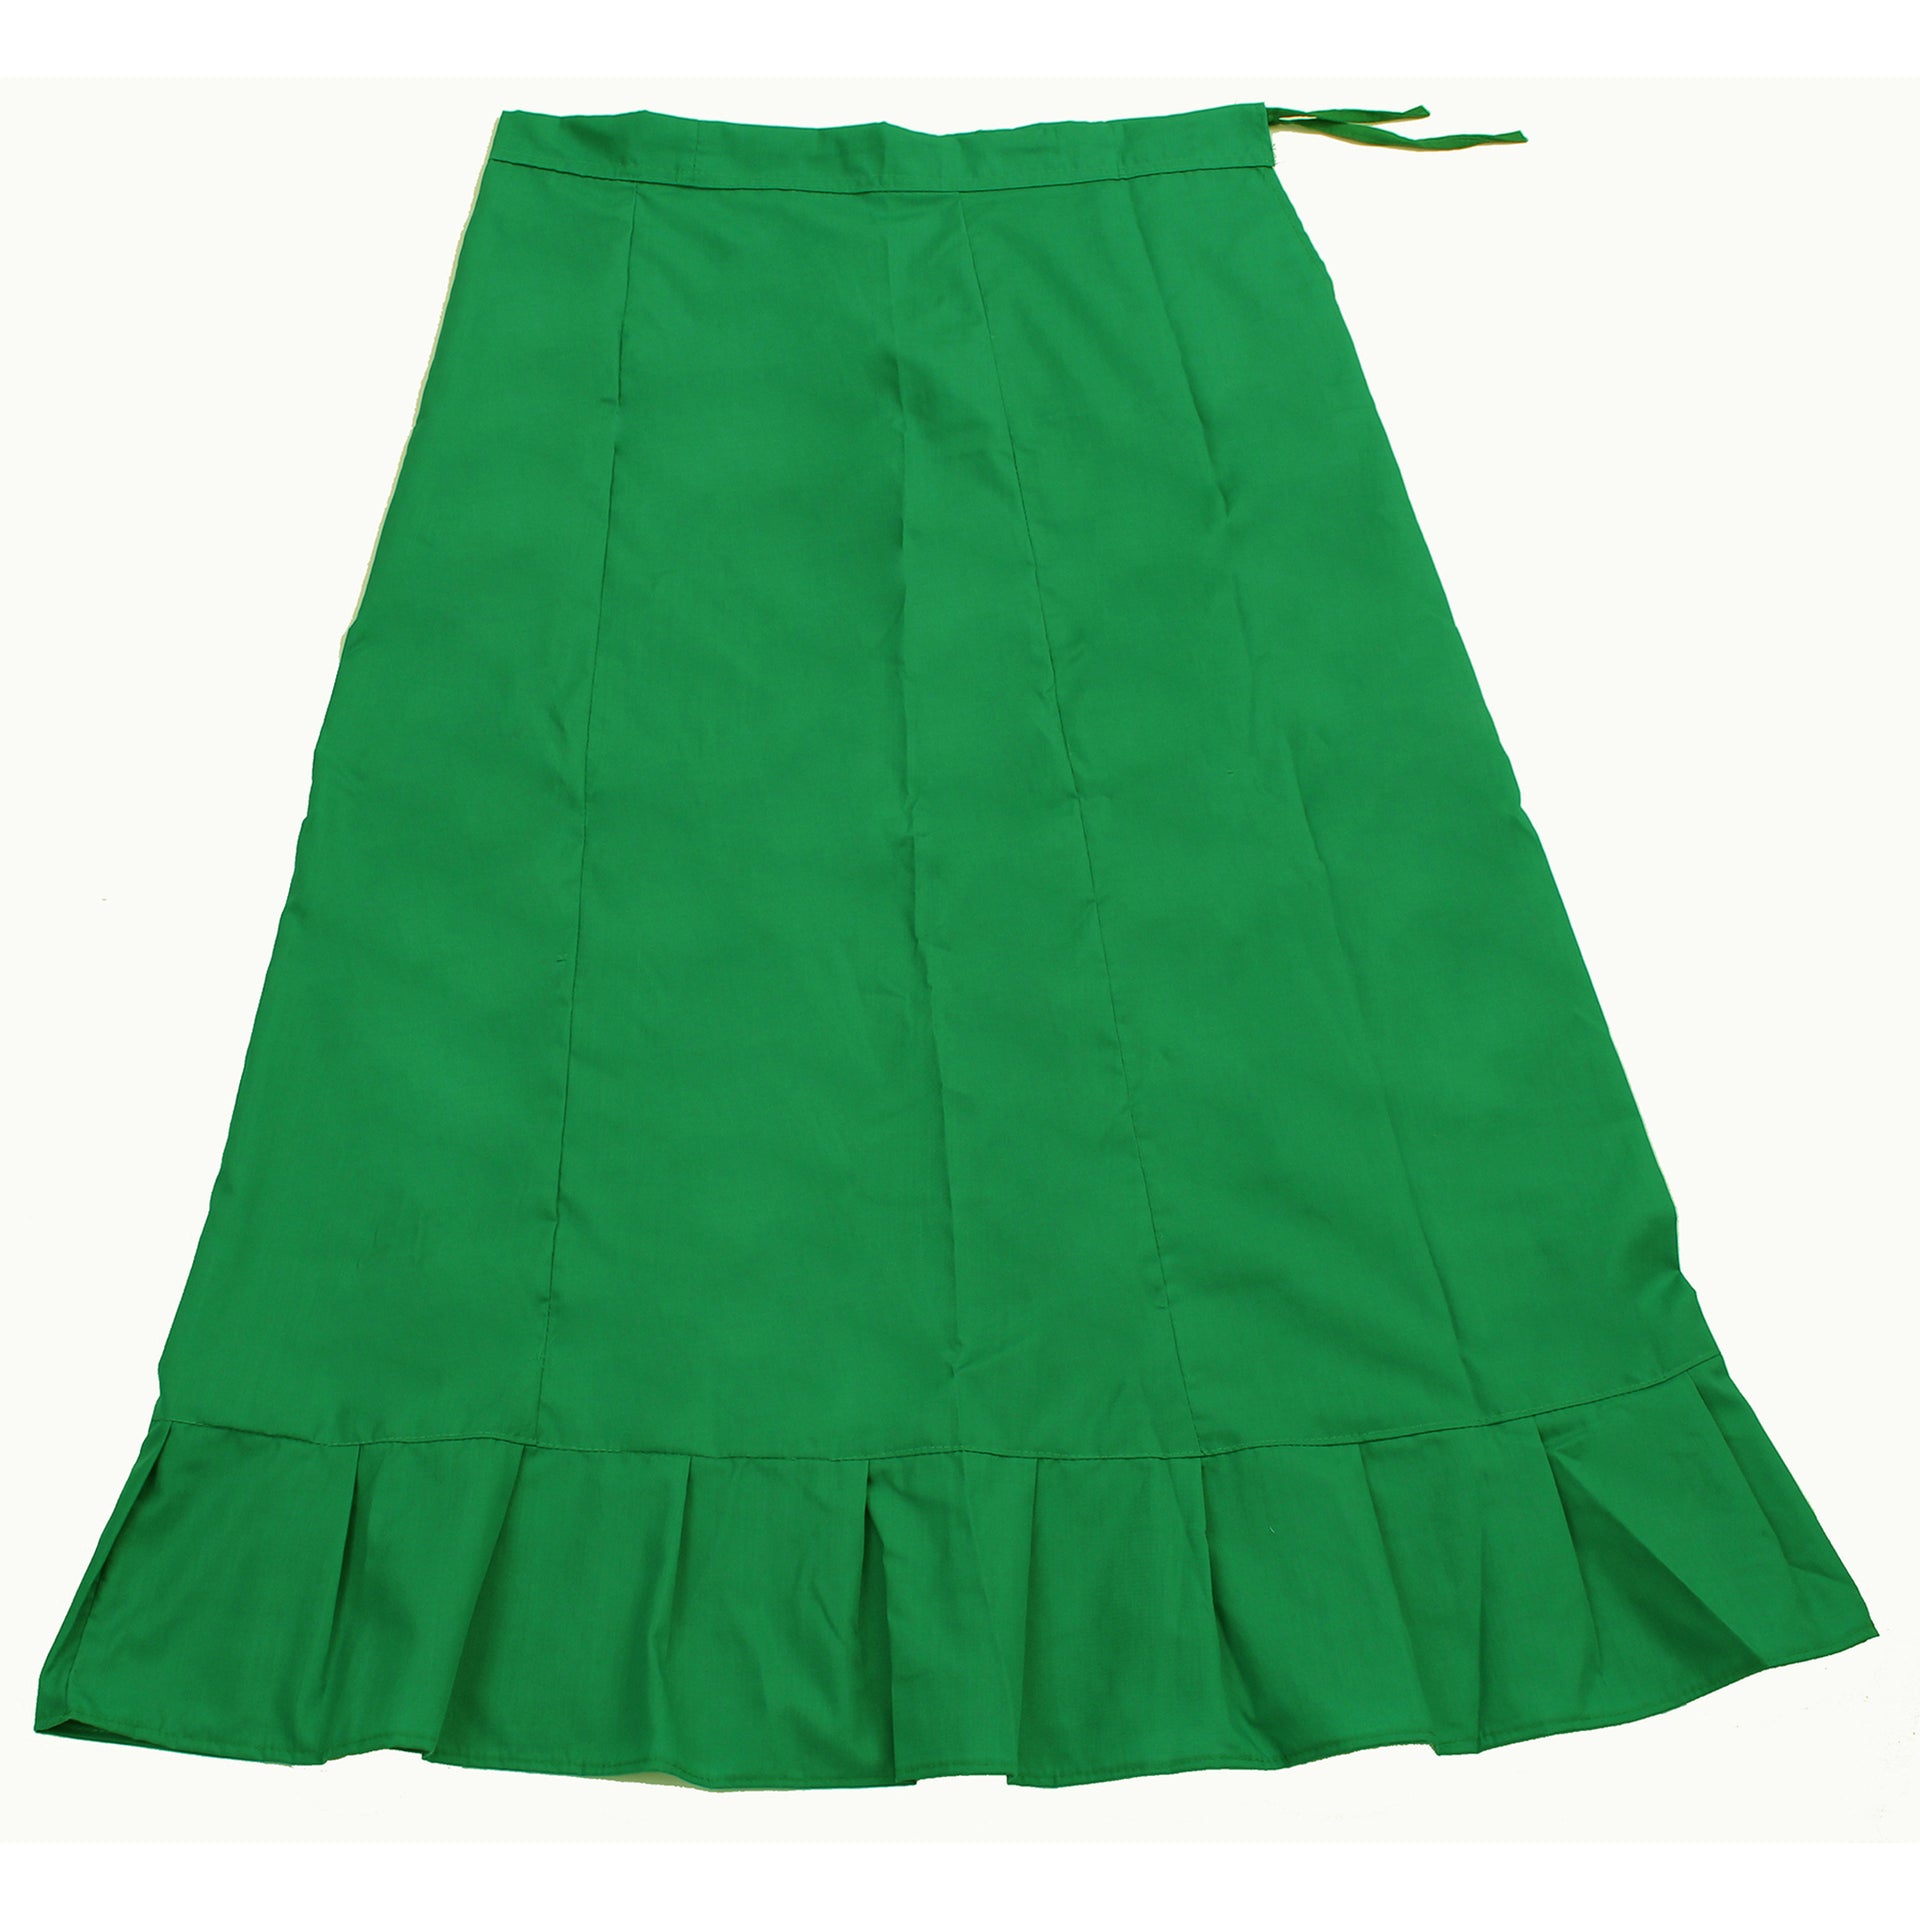 Jade - Sari (Saree) Petticoat - Available in S, M, L & XL - Underskirt